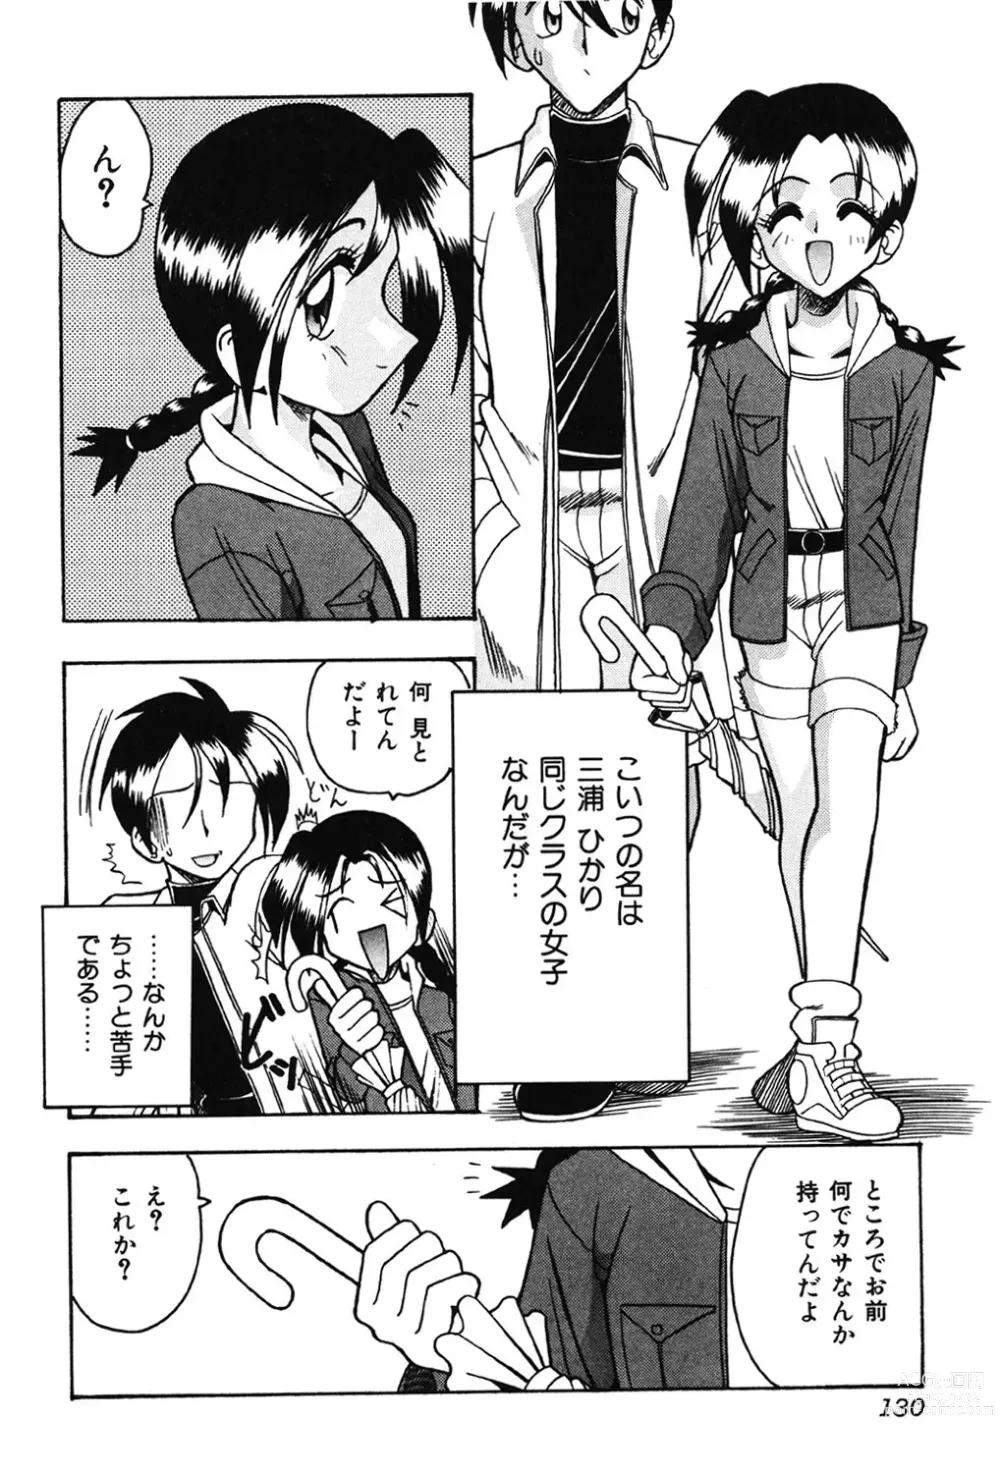 Page 129 of manga Hahaoya Ga Onna Ni Naru Toki